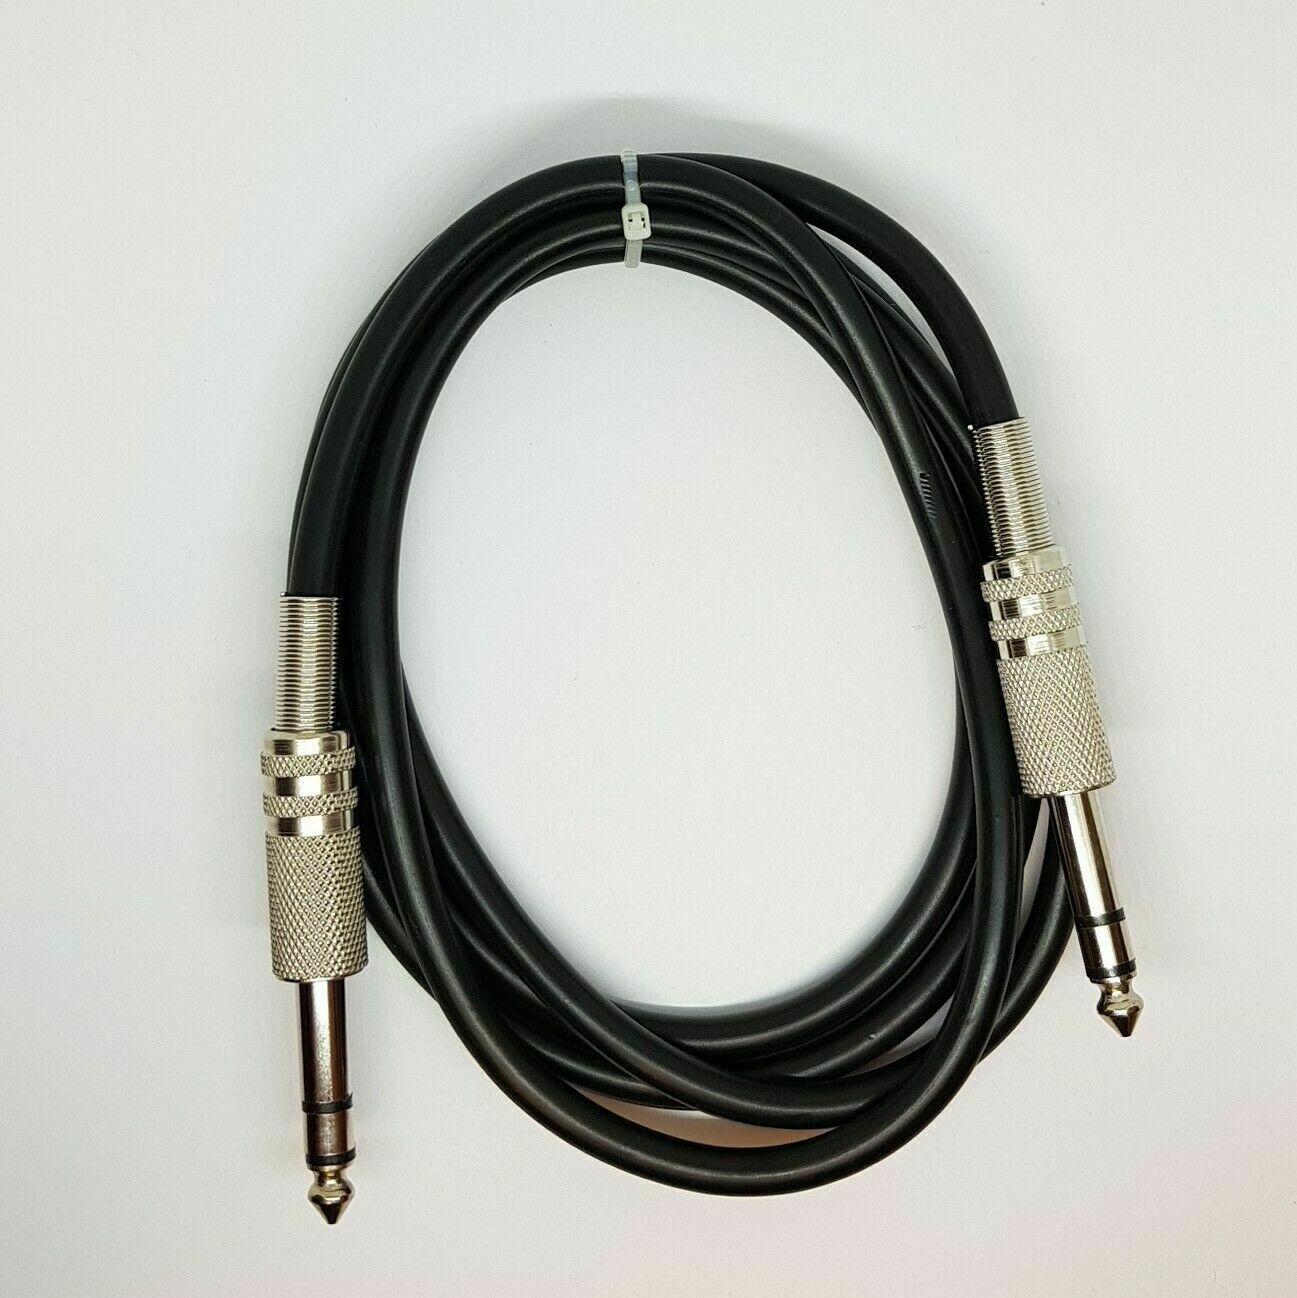 Stereo-Jack-635mm-14-inch-METAL-Plug-to-Plug-Cable-Lead-Black-15-m-black-123032473590-3.jpg